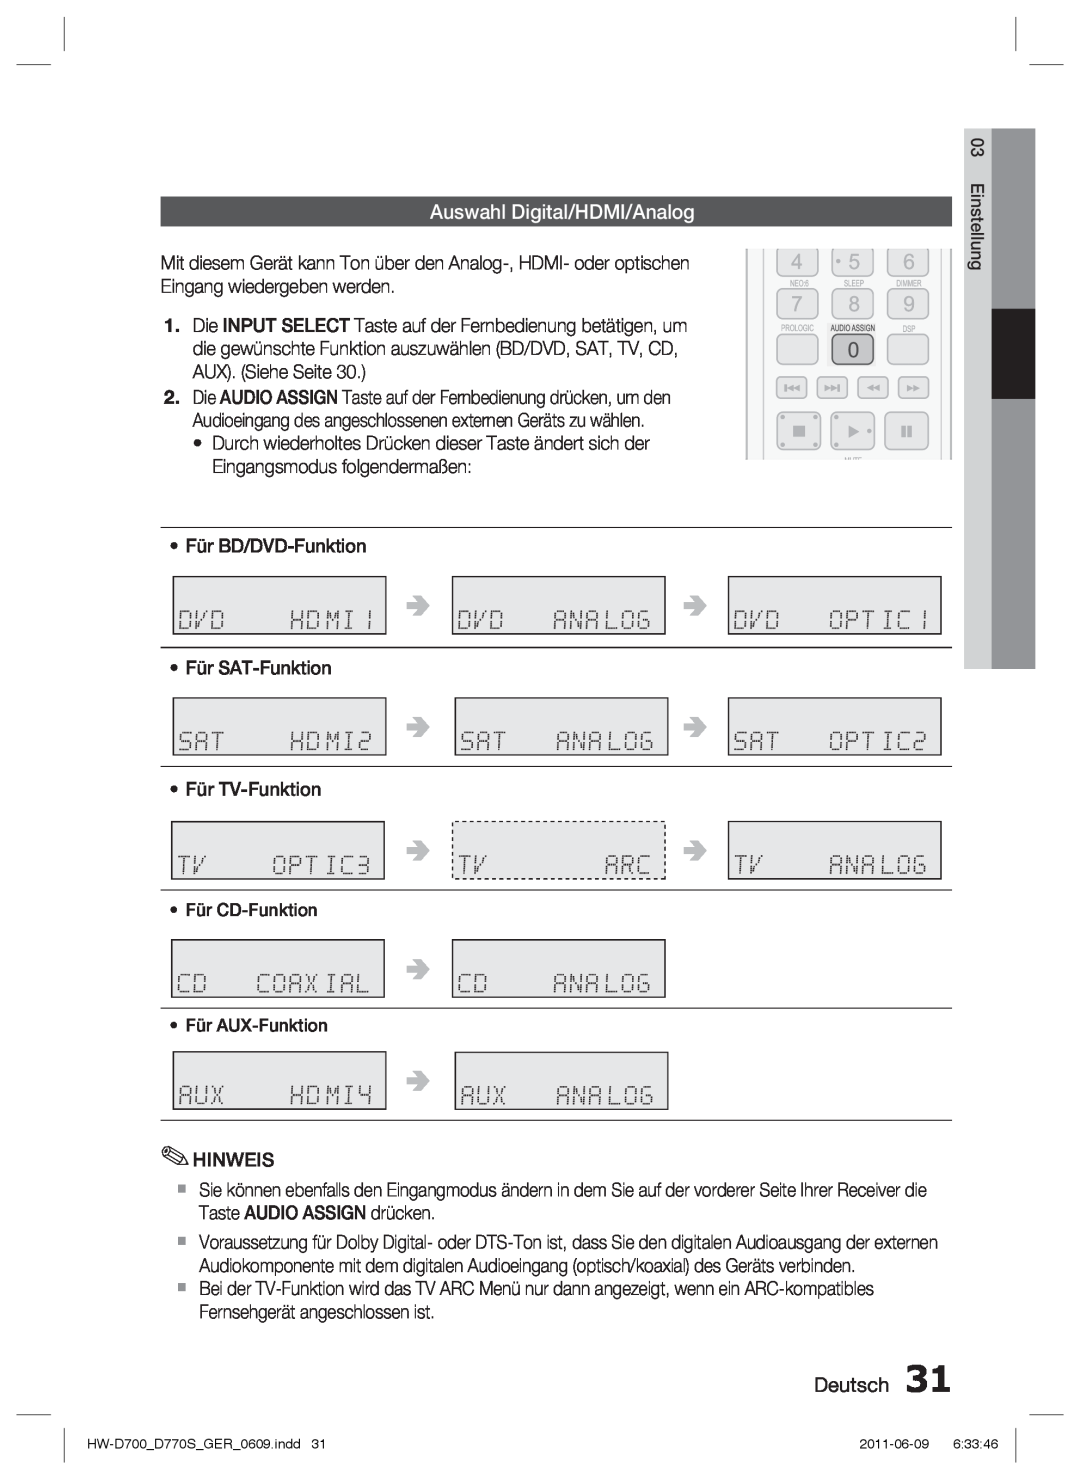 Samsung HW-D700/EN, HW-D770S/EN manual Auswahl Digital/HDMI/Analog, Deutsch, Einstellung 